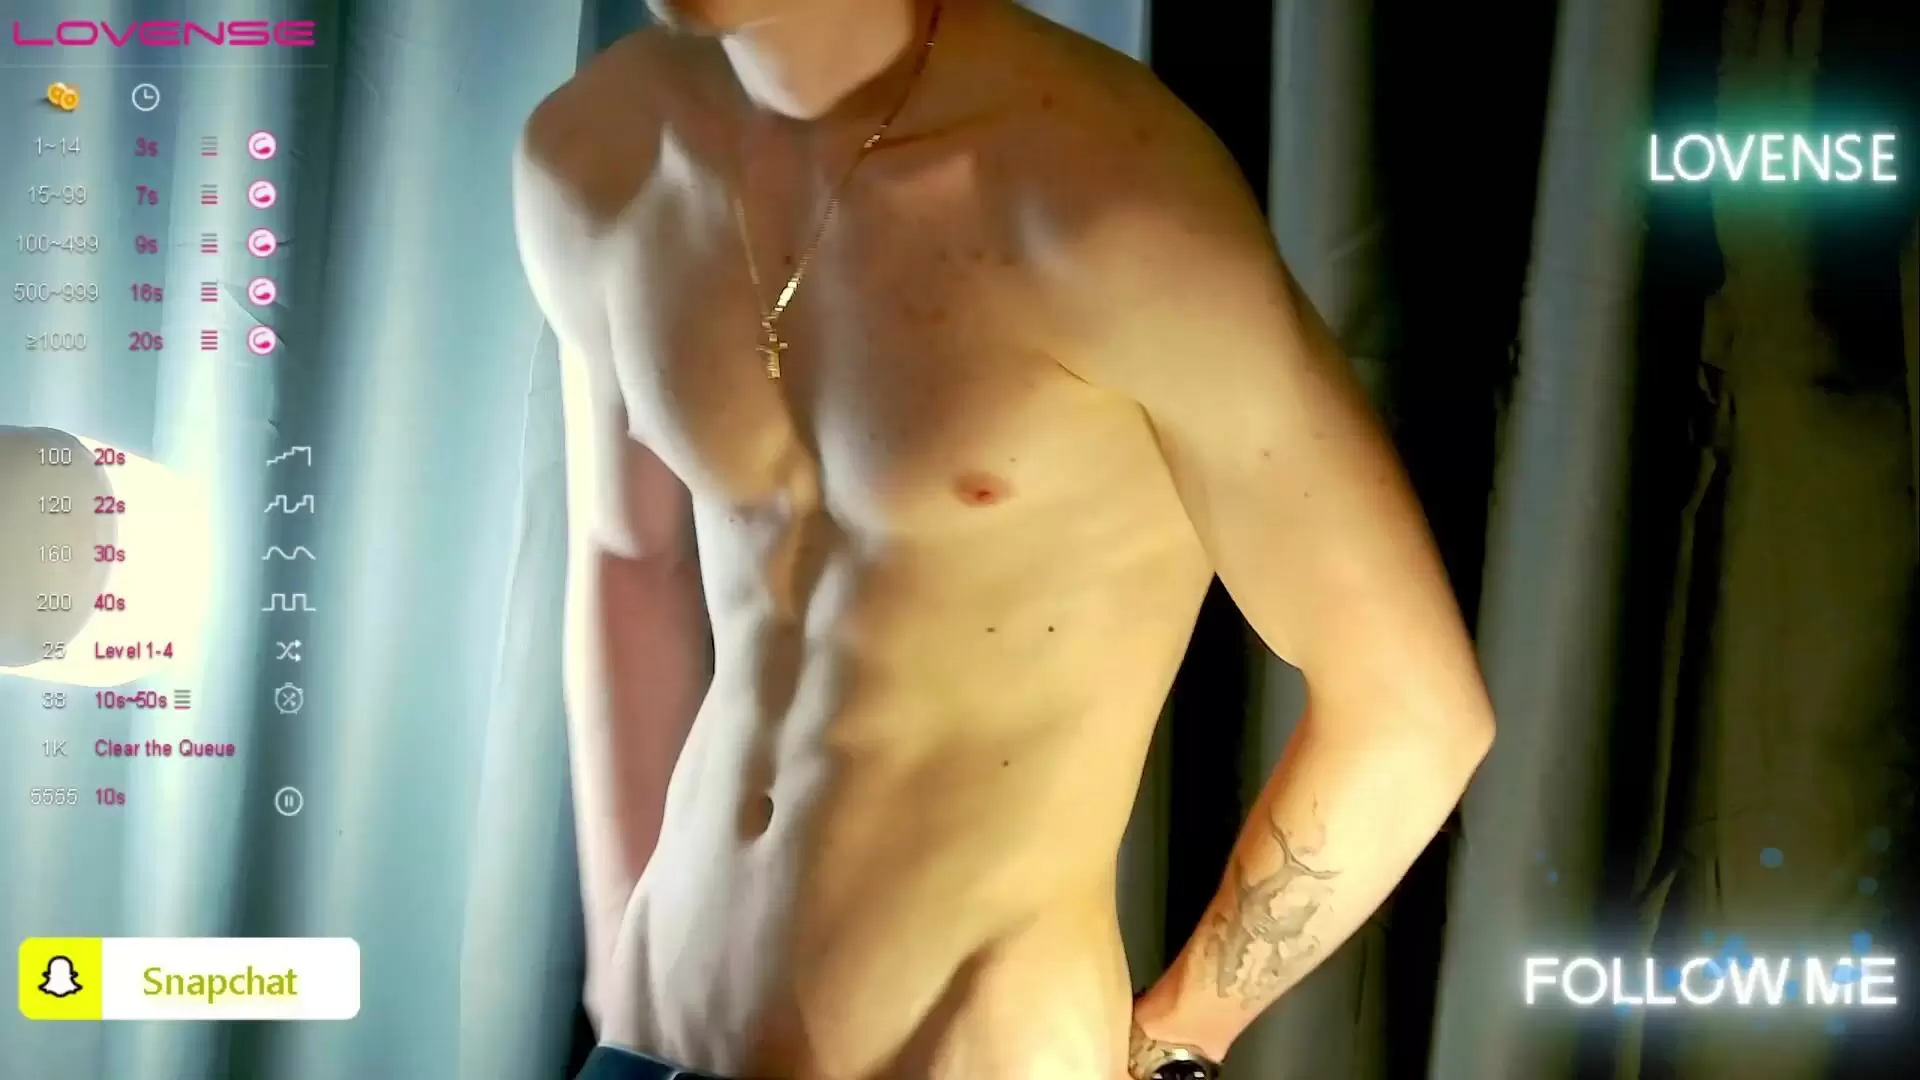 Matt_dis - Video muscular arab teenage--porn gay-boy-porn